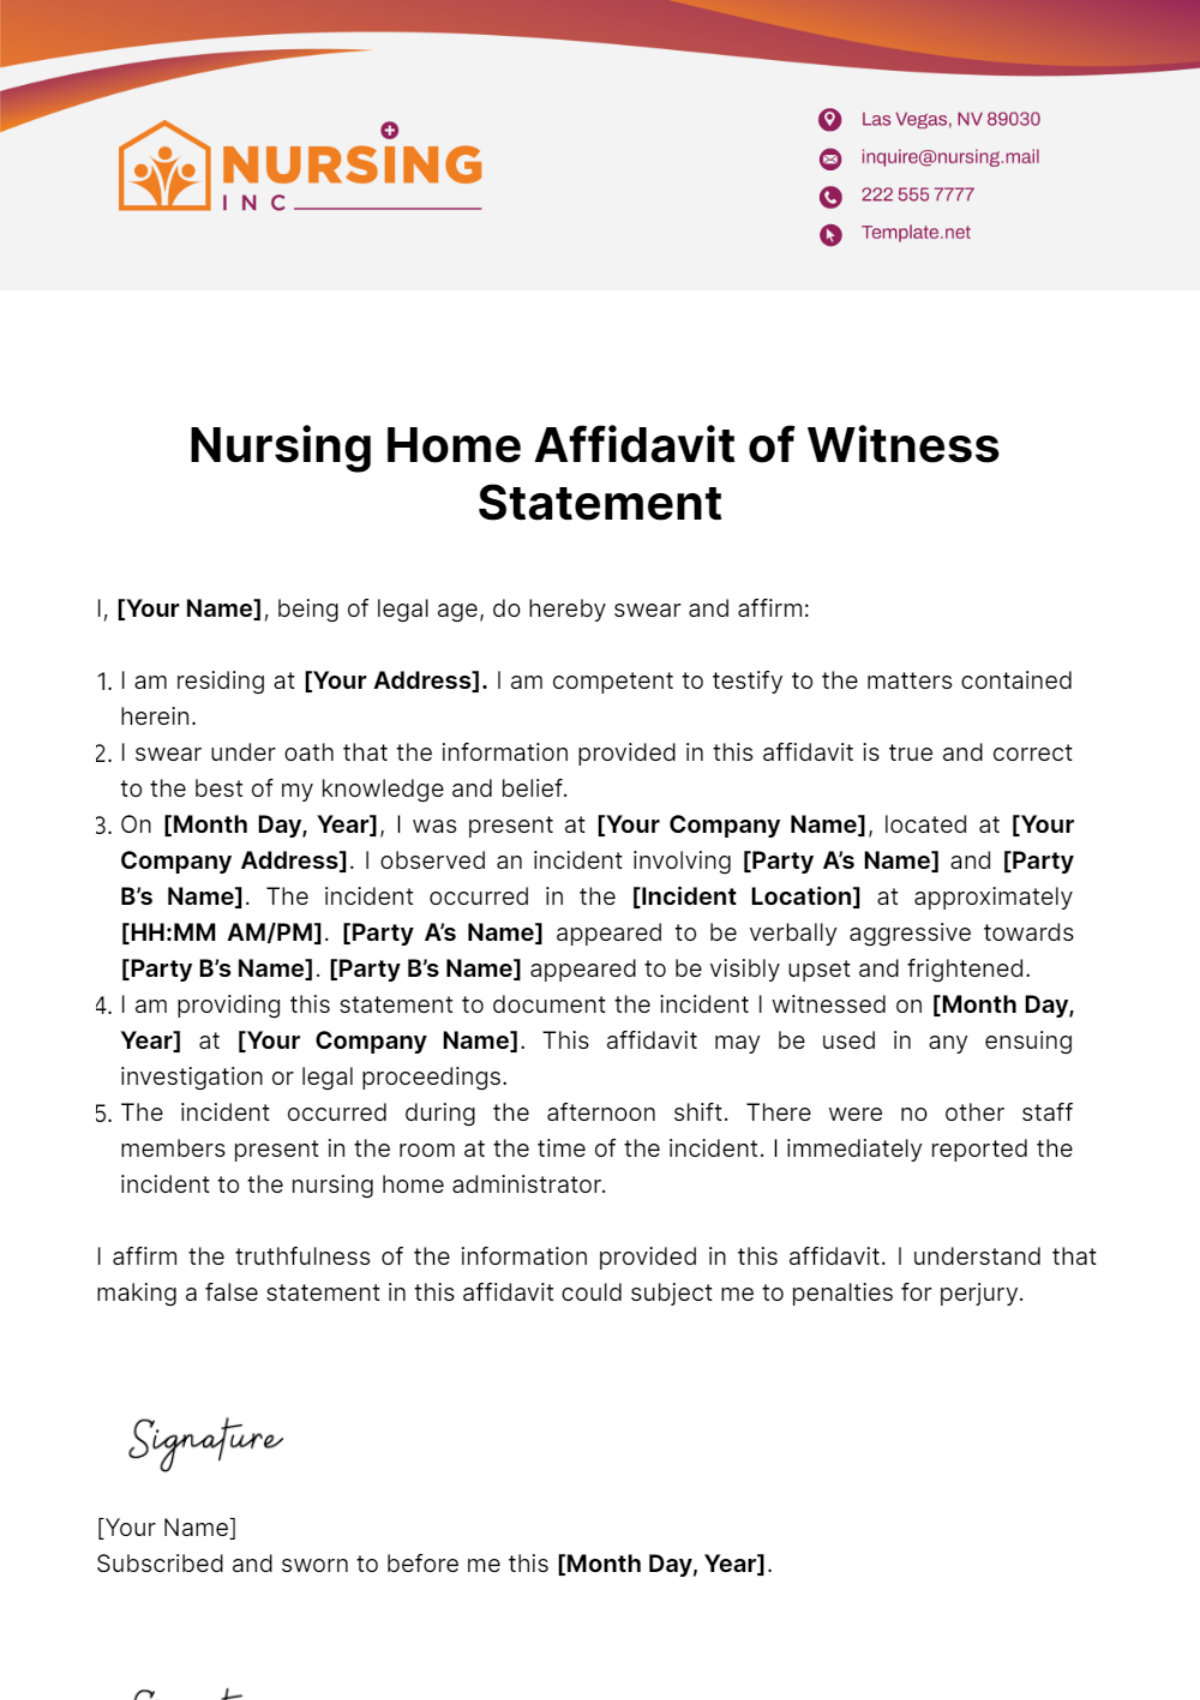 Nursing Home Affidavit of Witness Statement Template